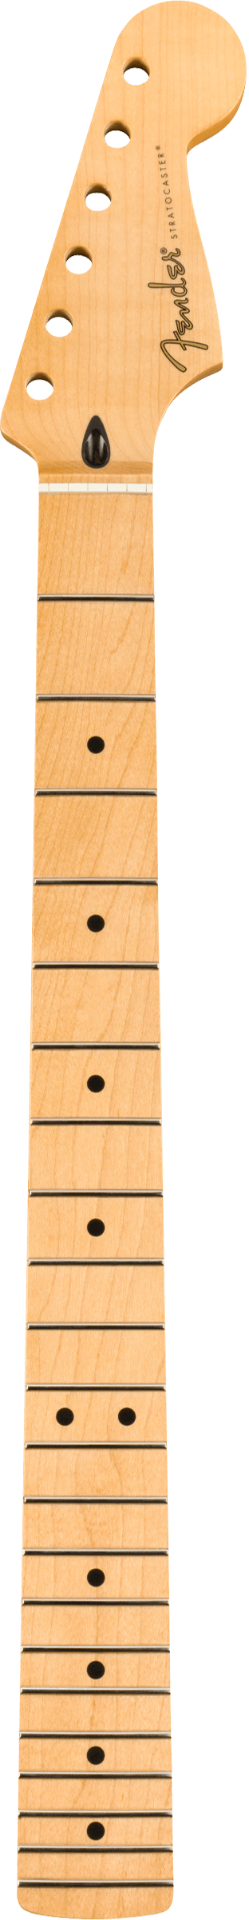 Fender Baritone Stratocaster Neck - 22 Fret - Maple Fingerboard